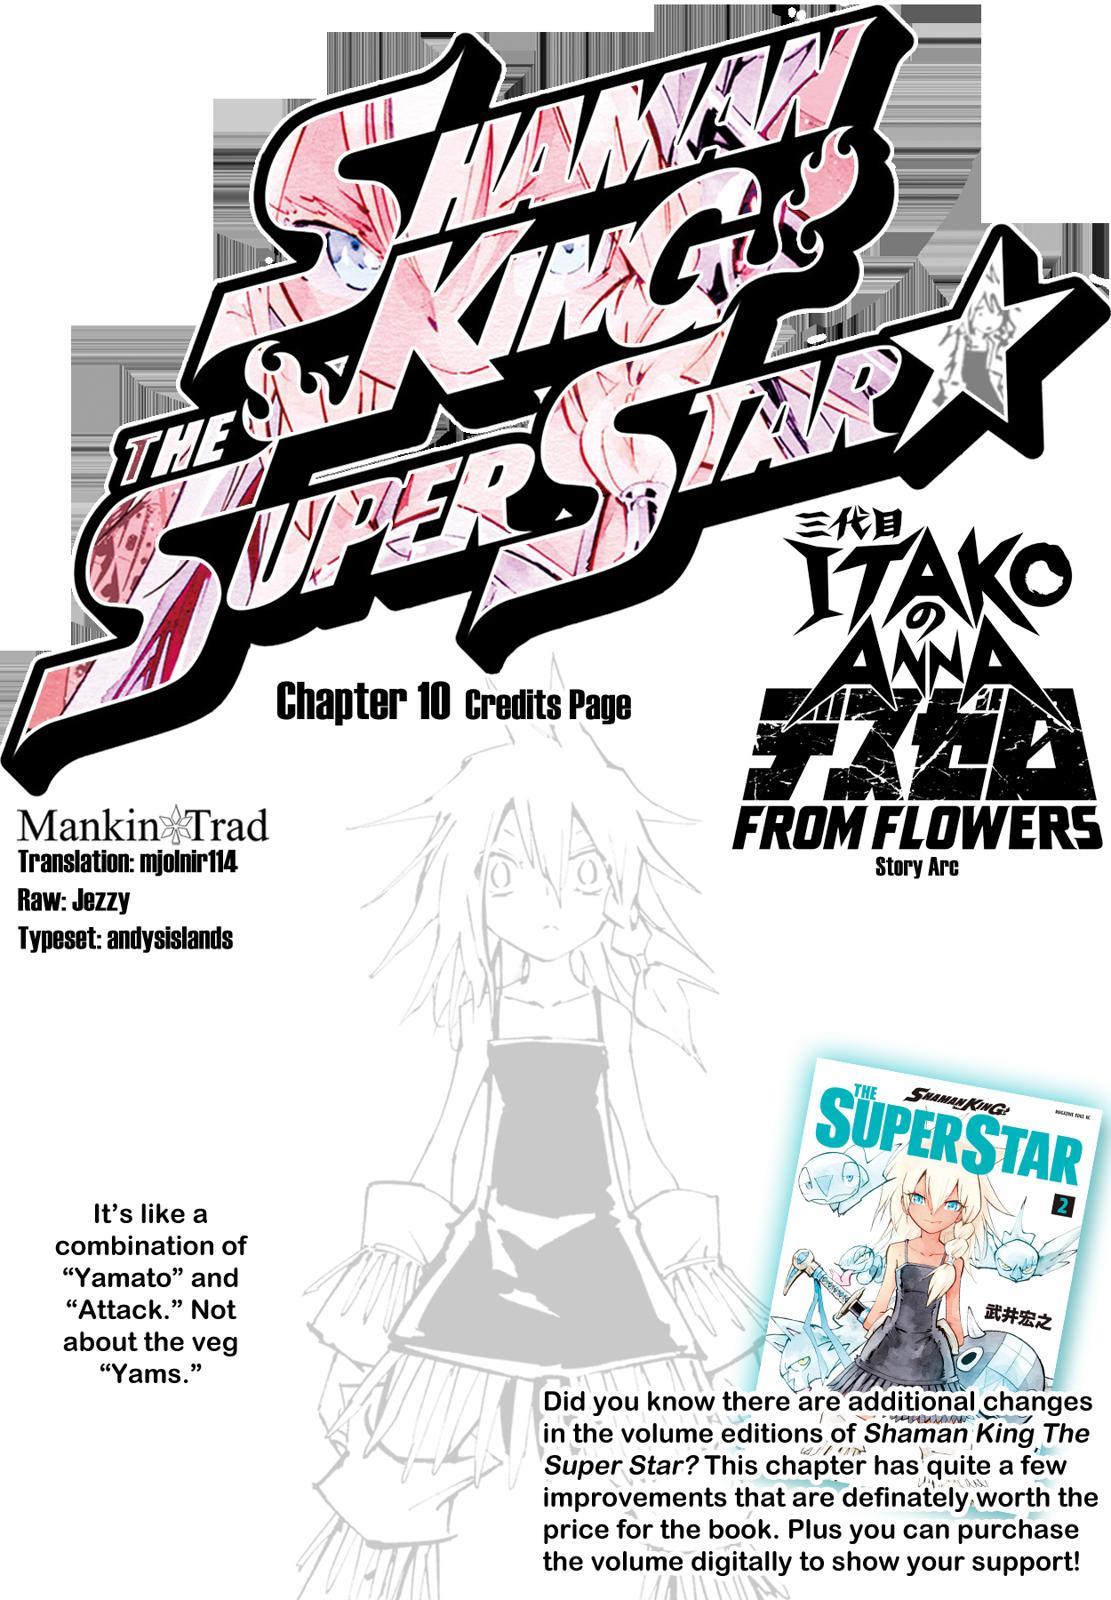 Read Shaman King The Super Star Chapter 10 On Mangakakalot